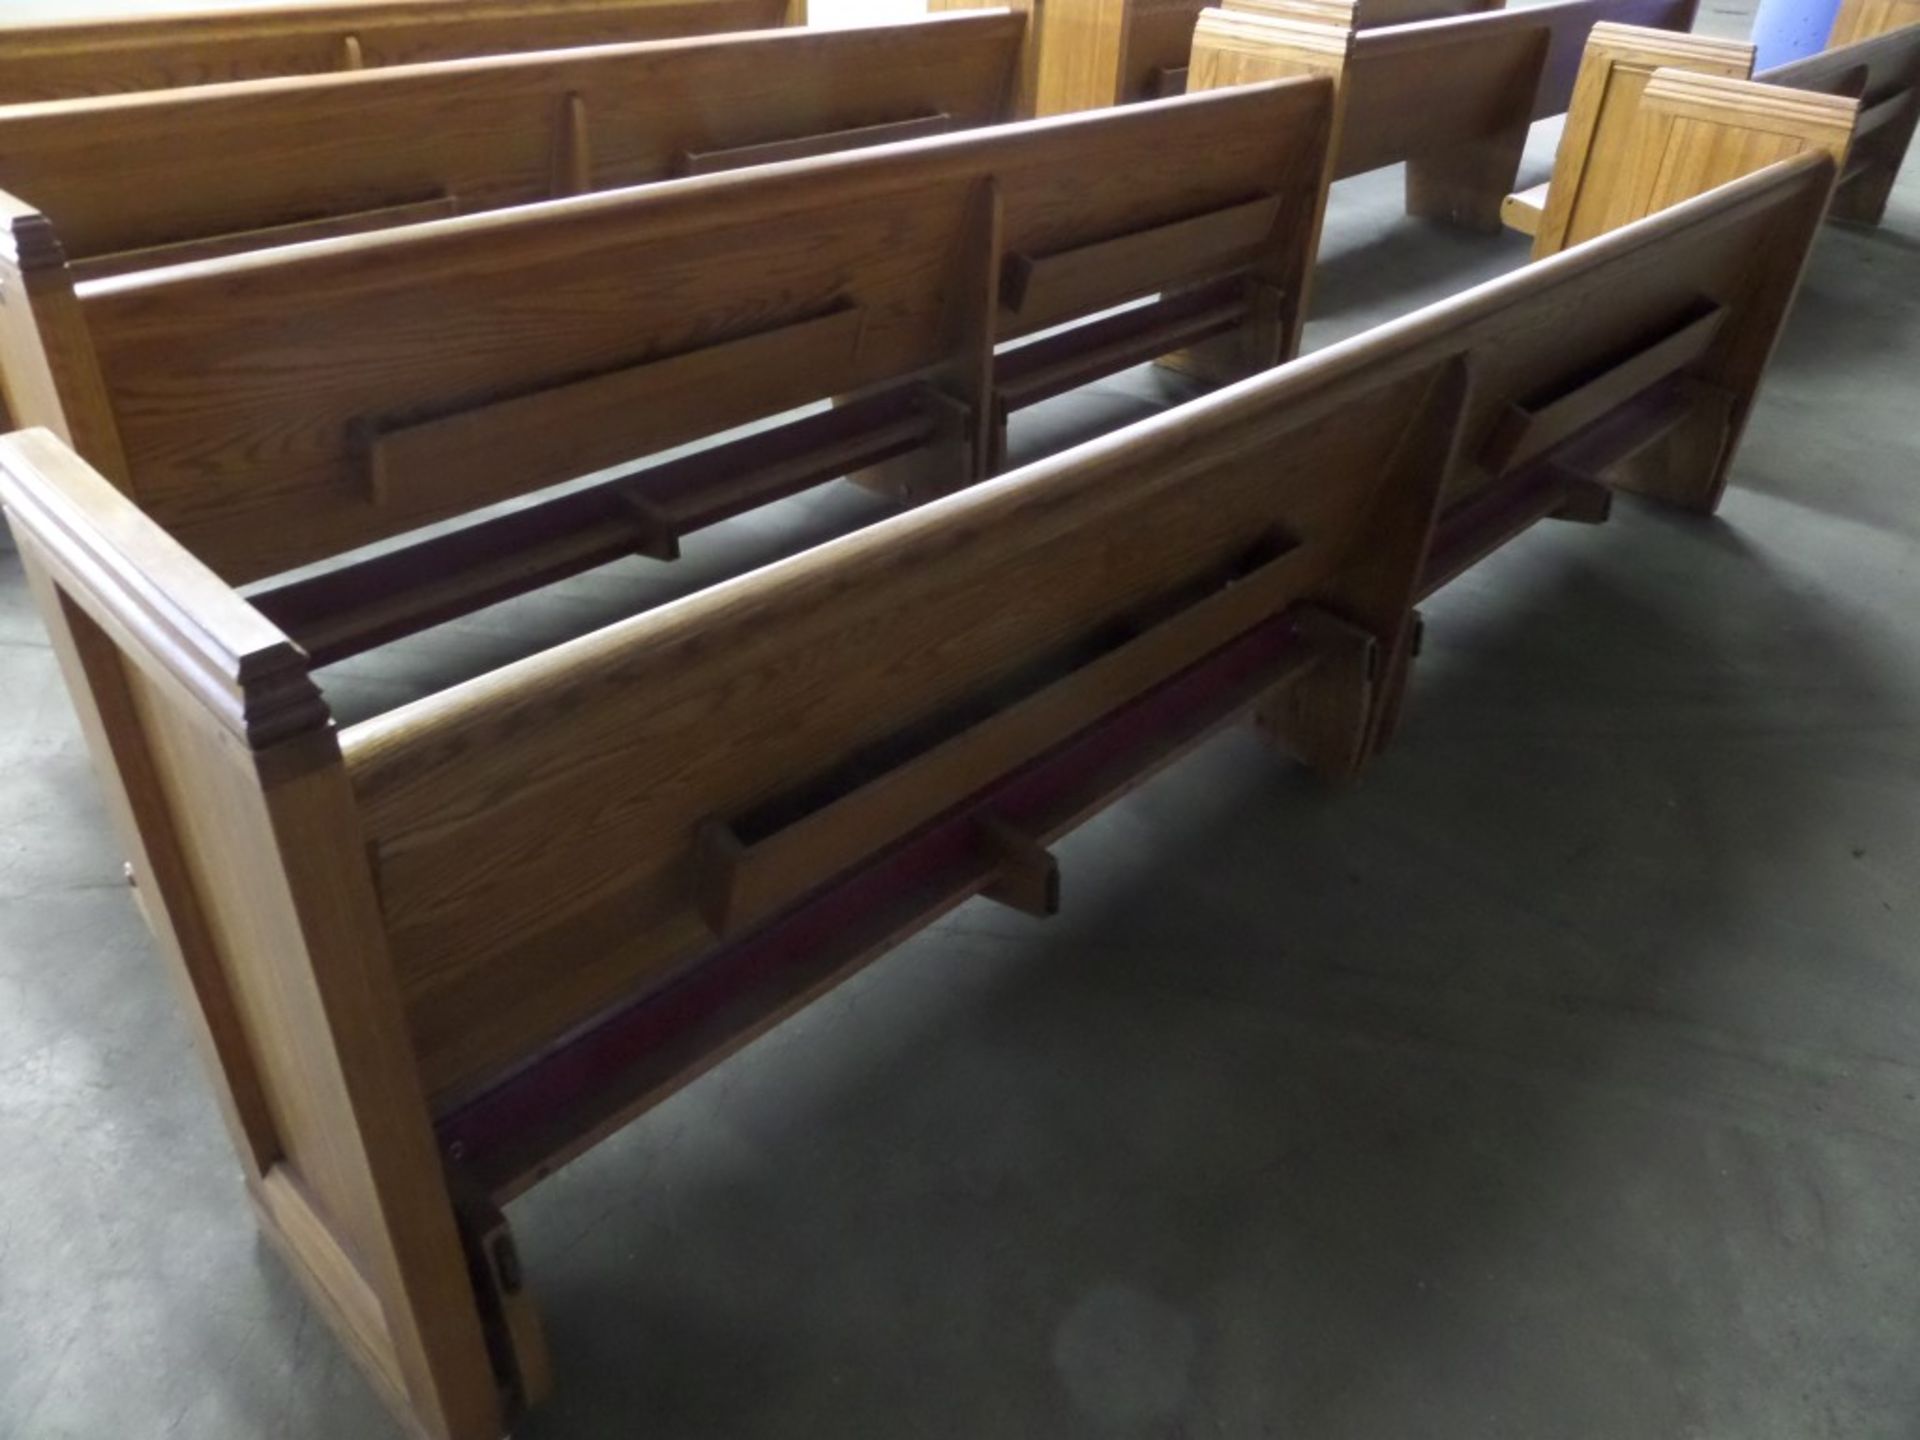 Oak Church Pew 9' Seating Bench #4 - Image 2 of 2